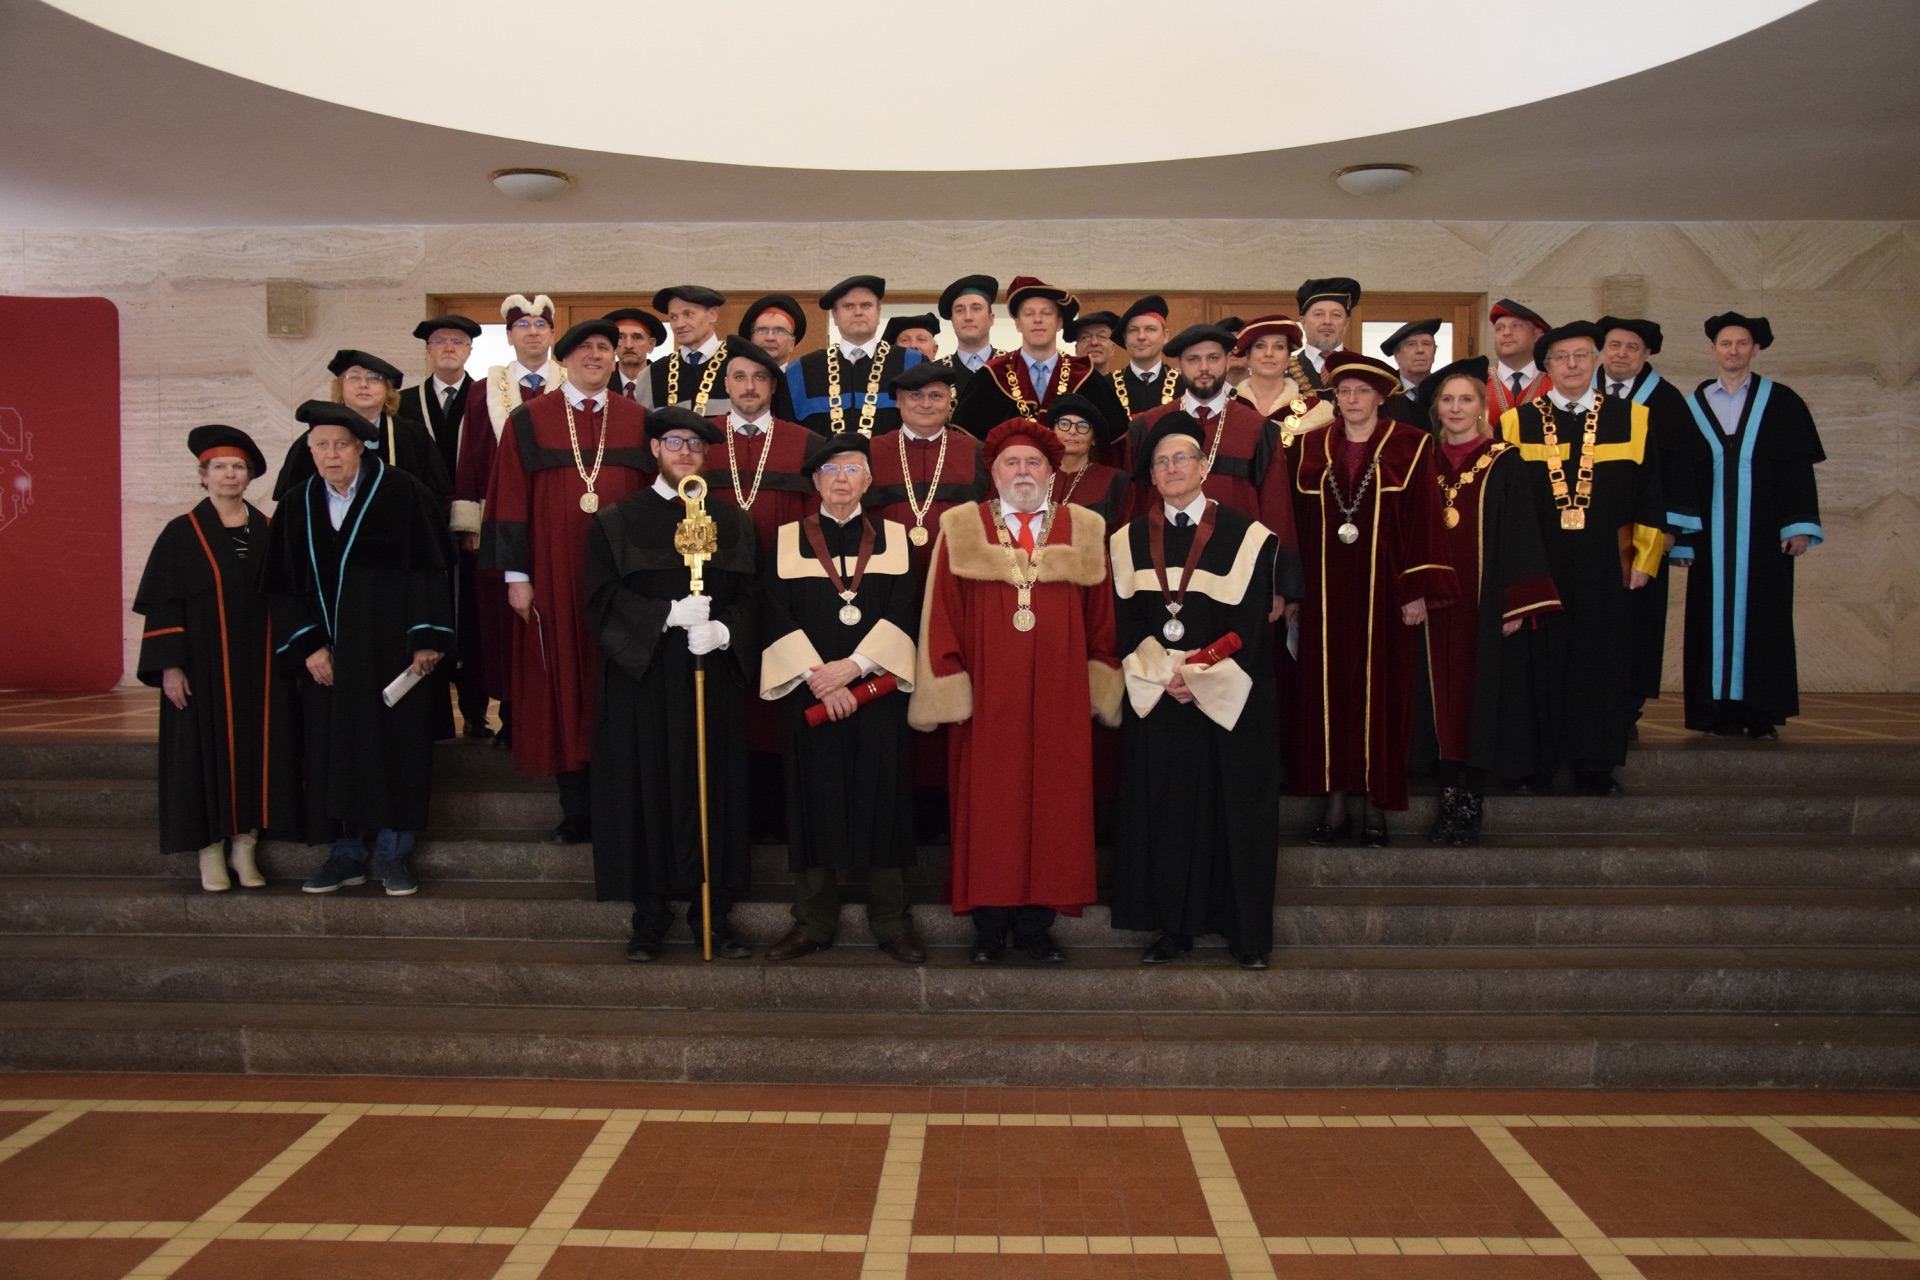 STU udelila titul „Doctor honoris causa“ dvom laureátom Nobelovej ceny za chémiu